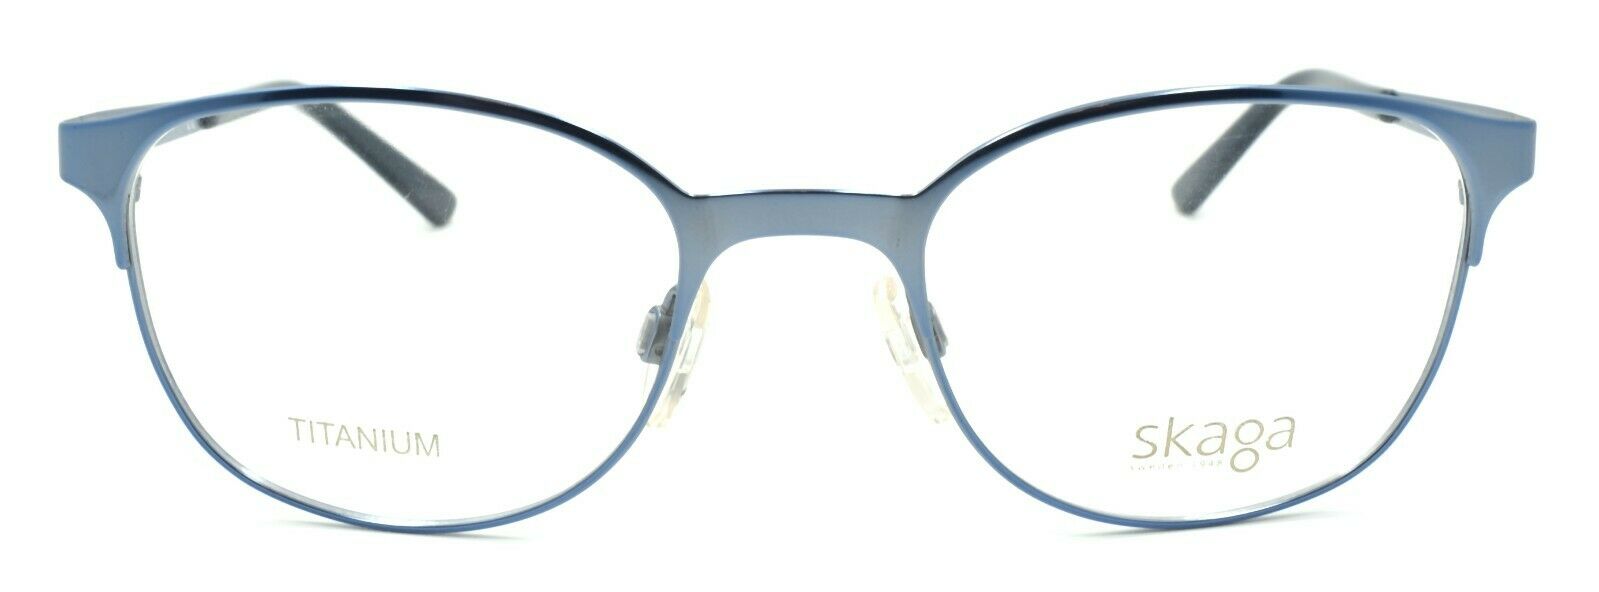 2-Skaga 3748-U Timo 306 Men's Eyeglasses Frames TITANIUM 50-20-140 Petrol Blue-IKSpecs